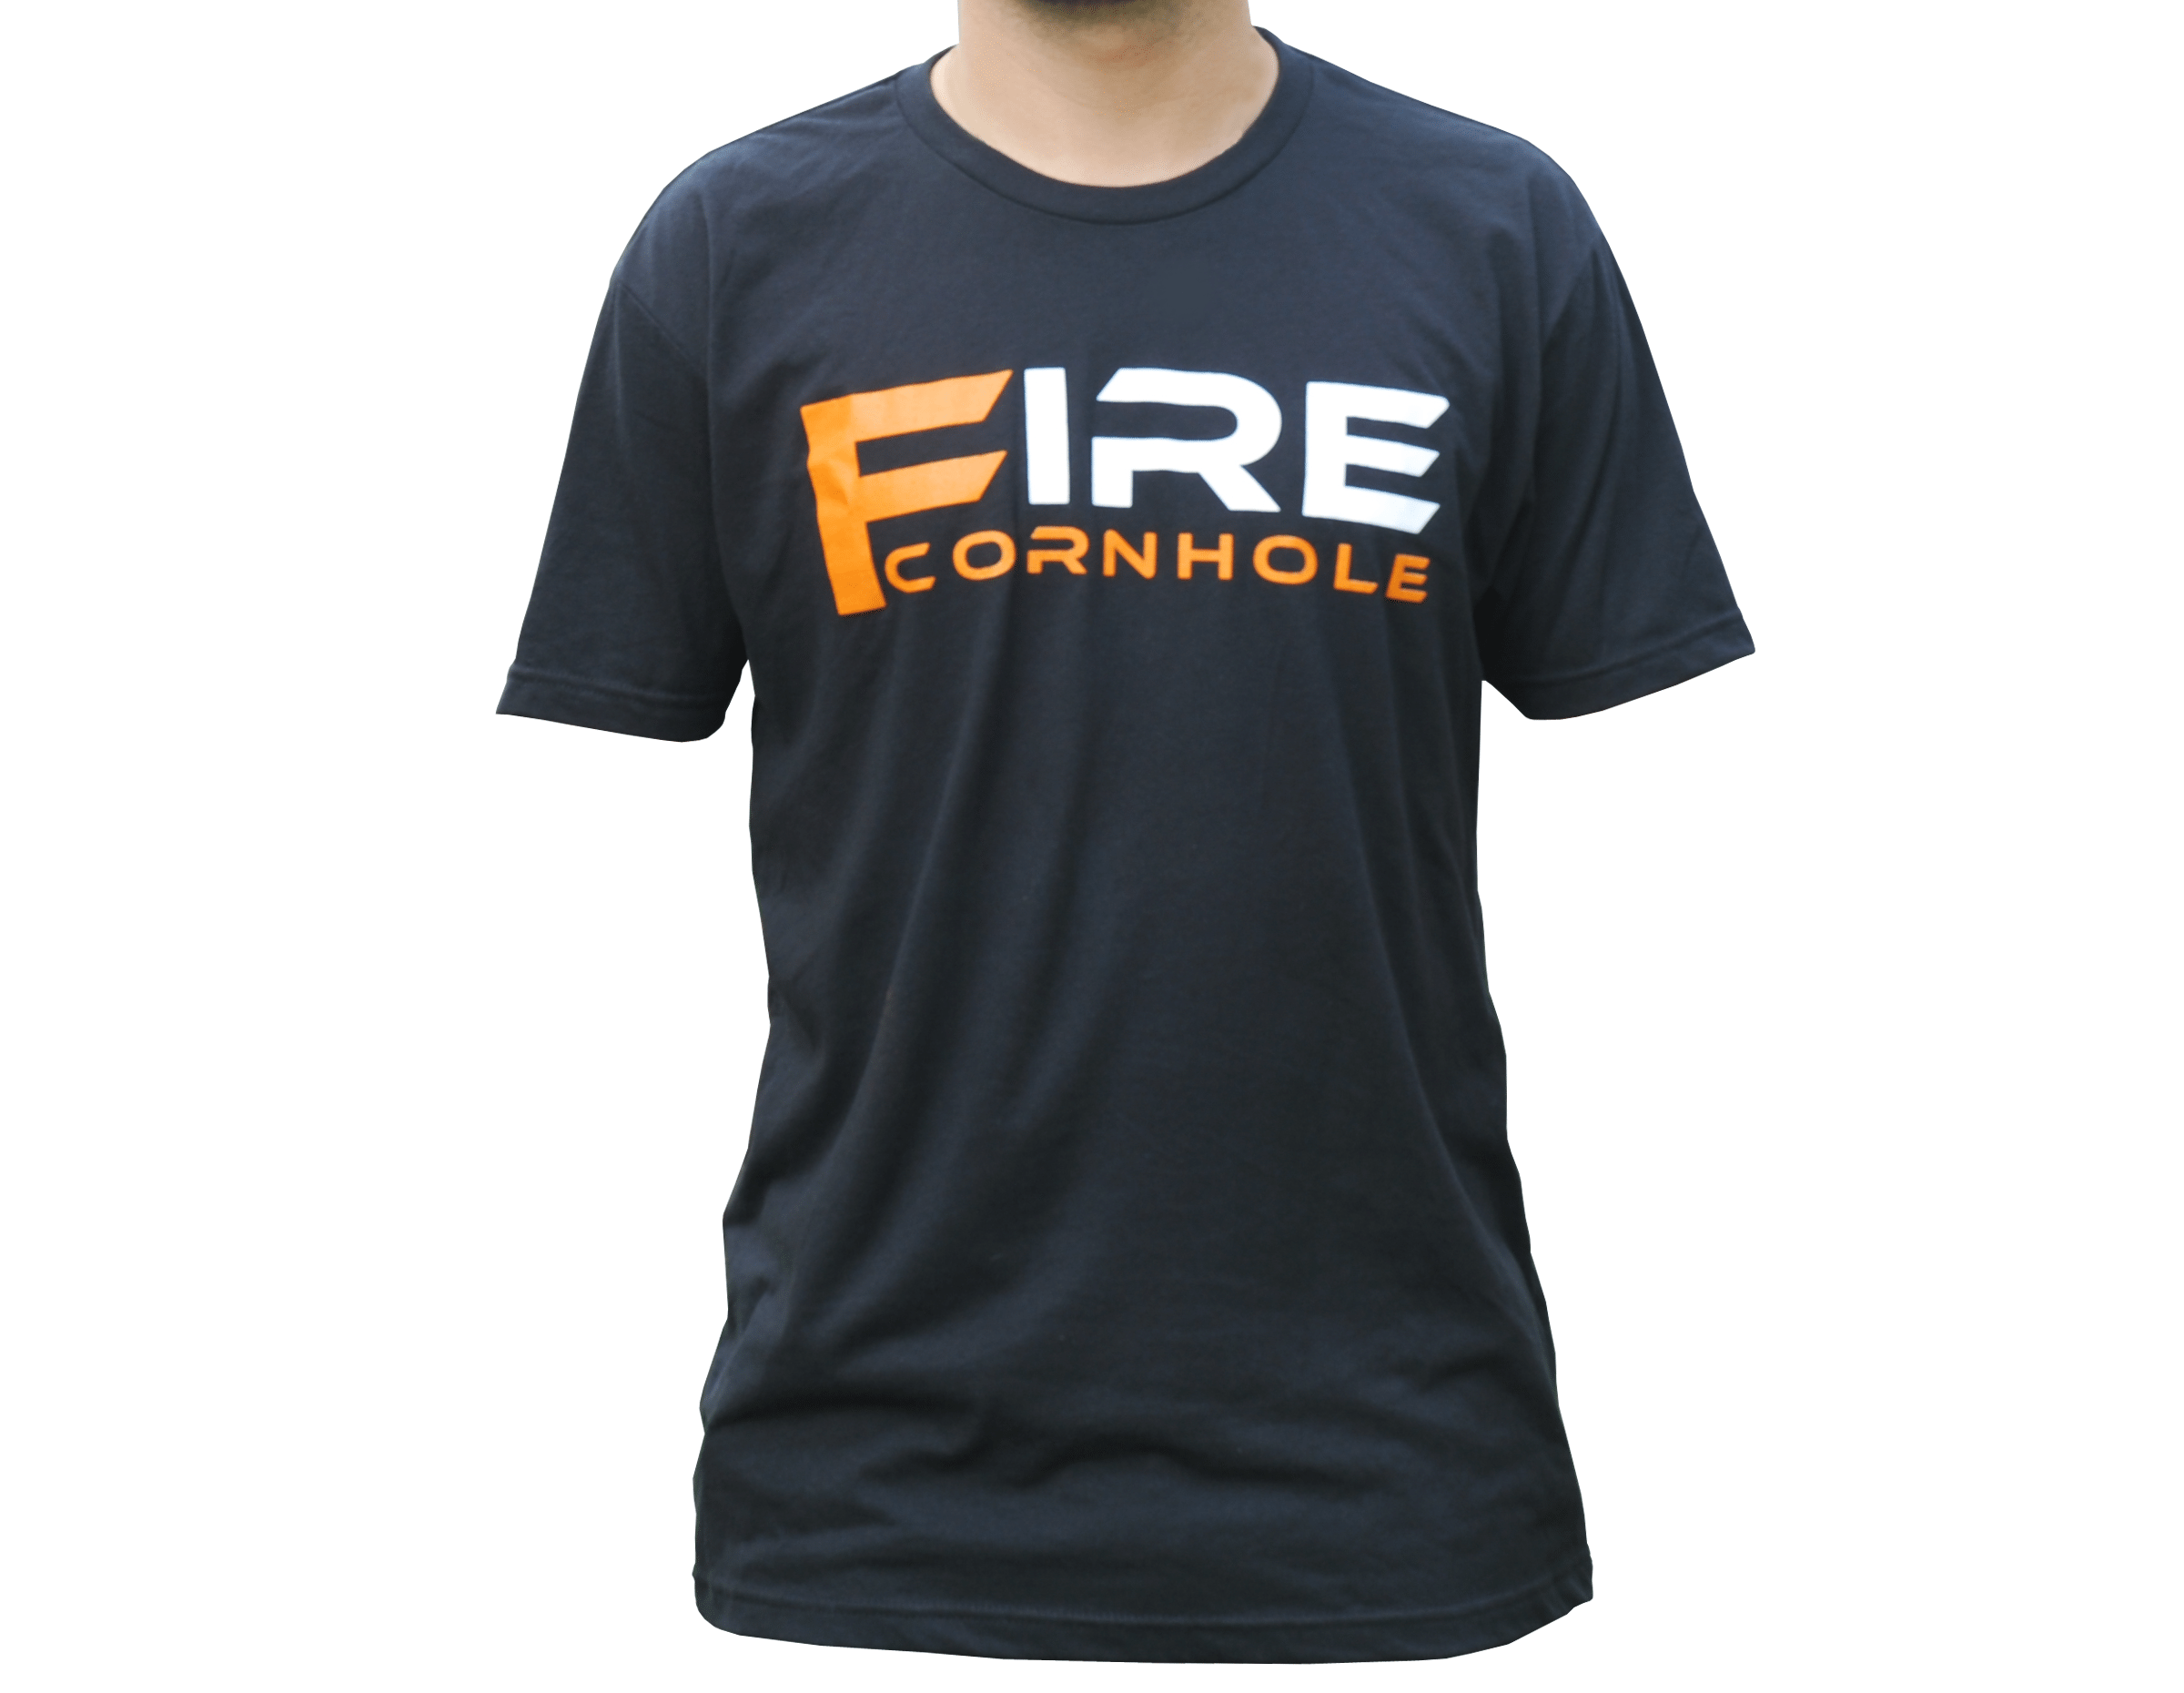 Fire Cornhole Black shirt with orange logo